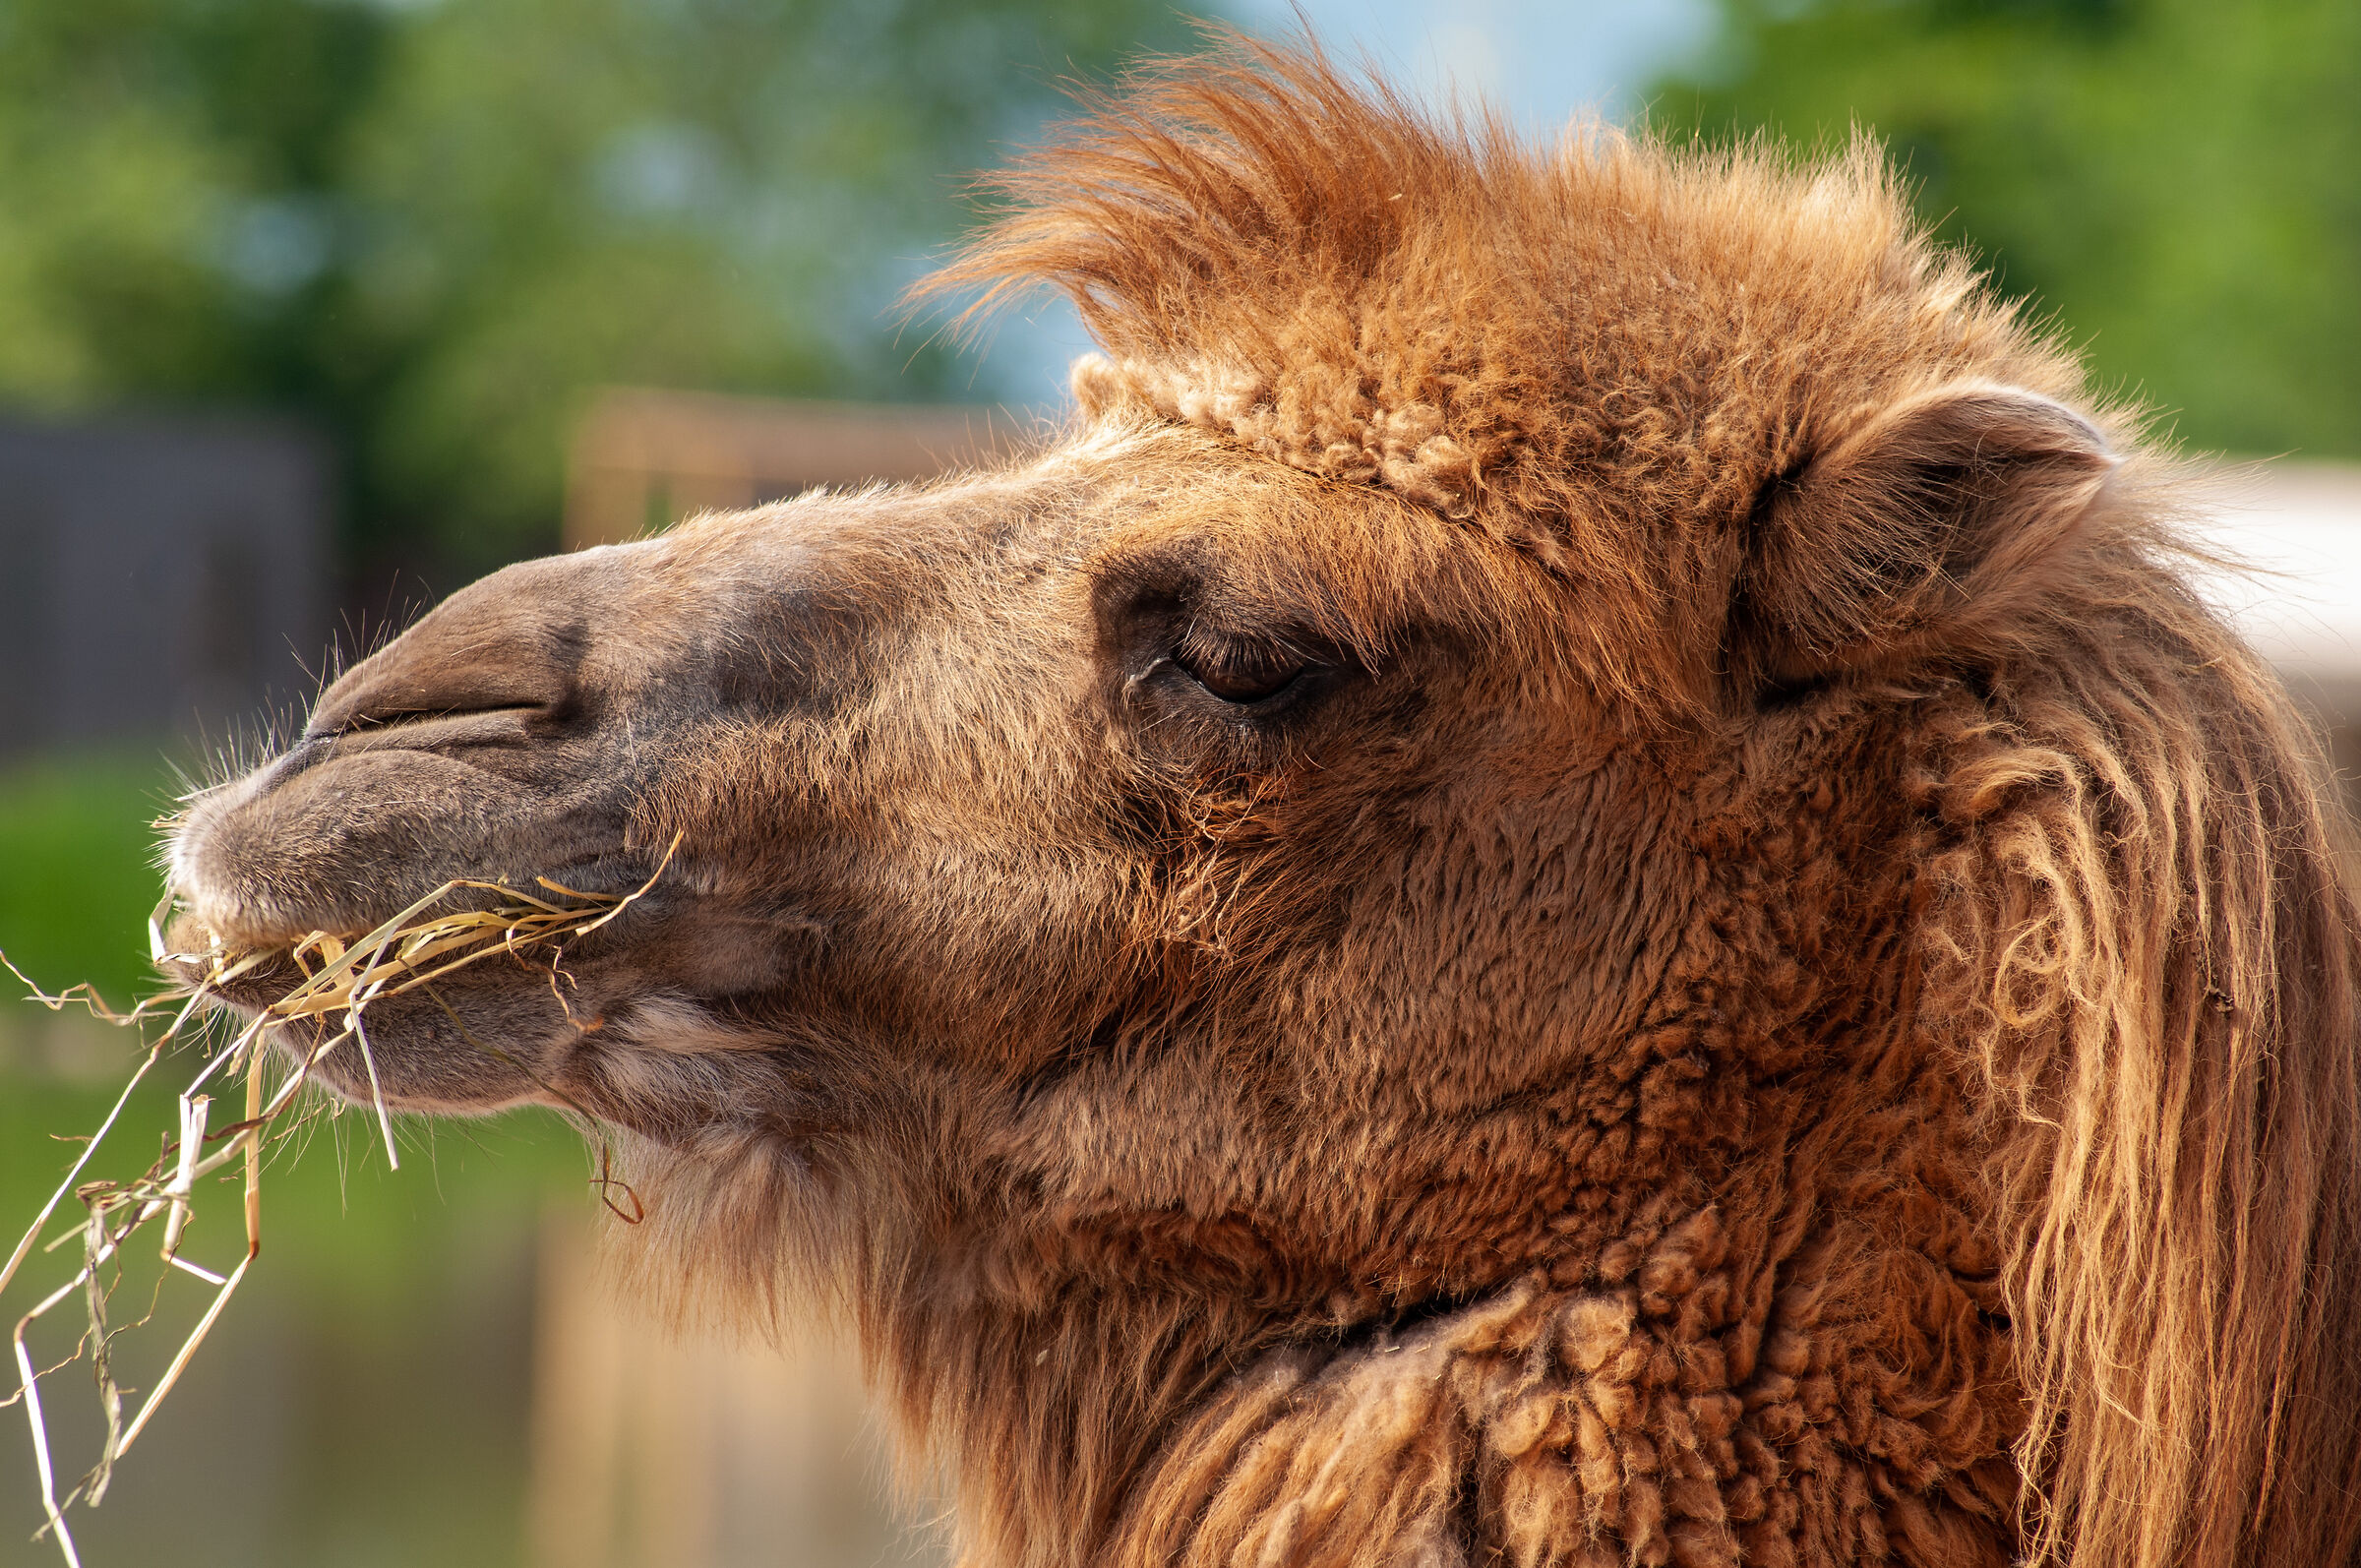 Camel or dromedary?...